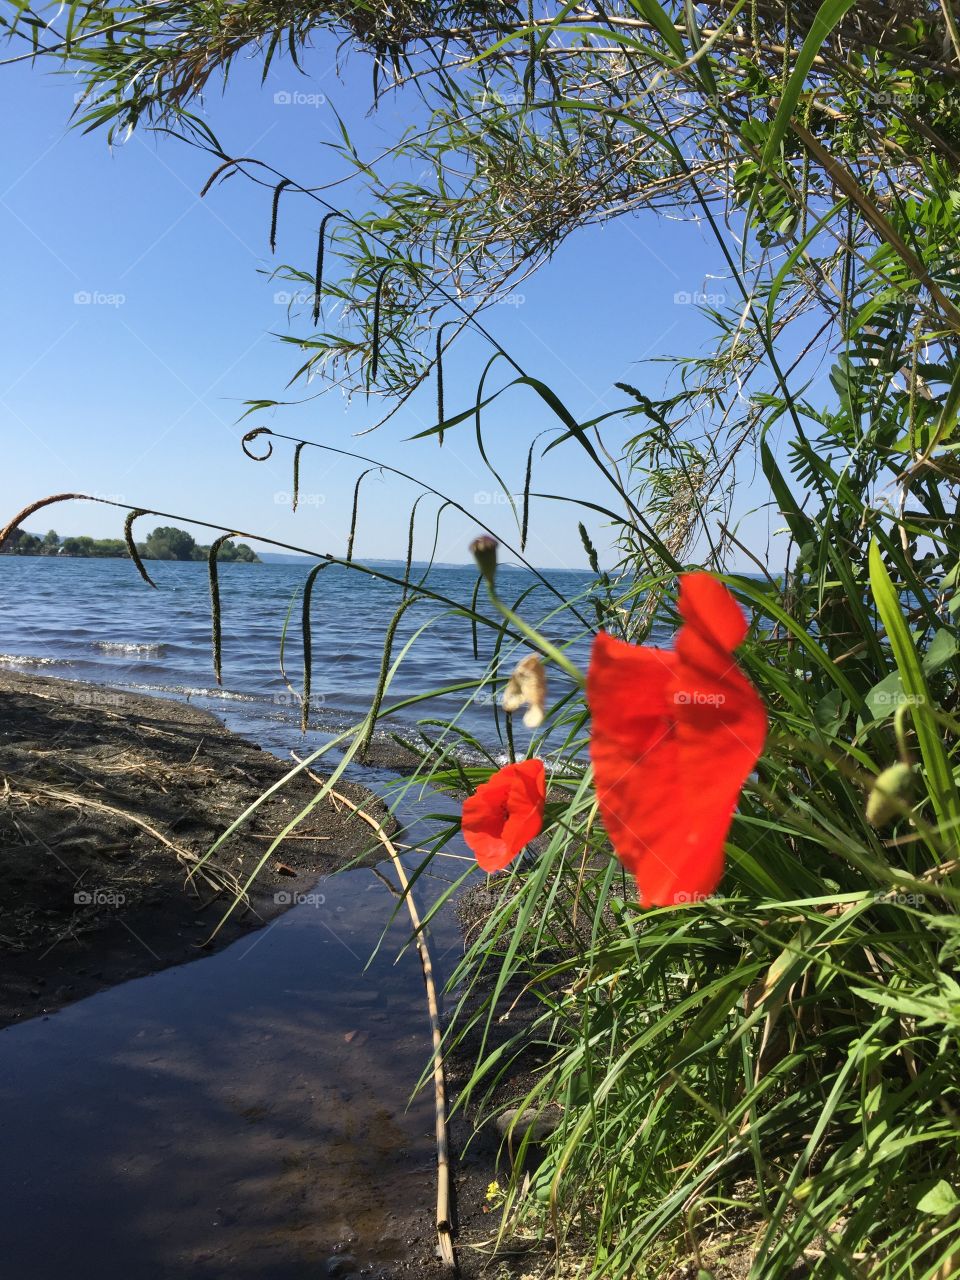 Poppy at the lake